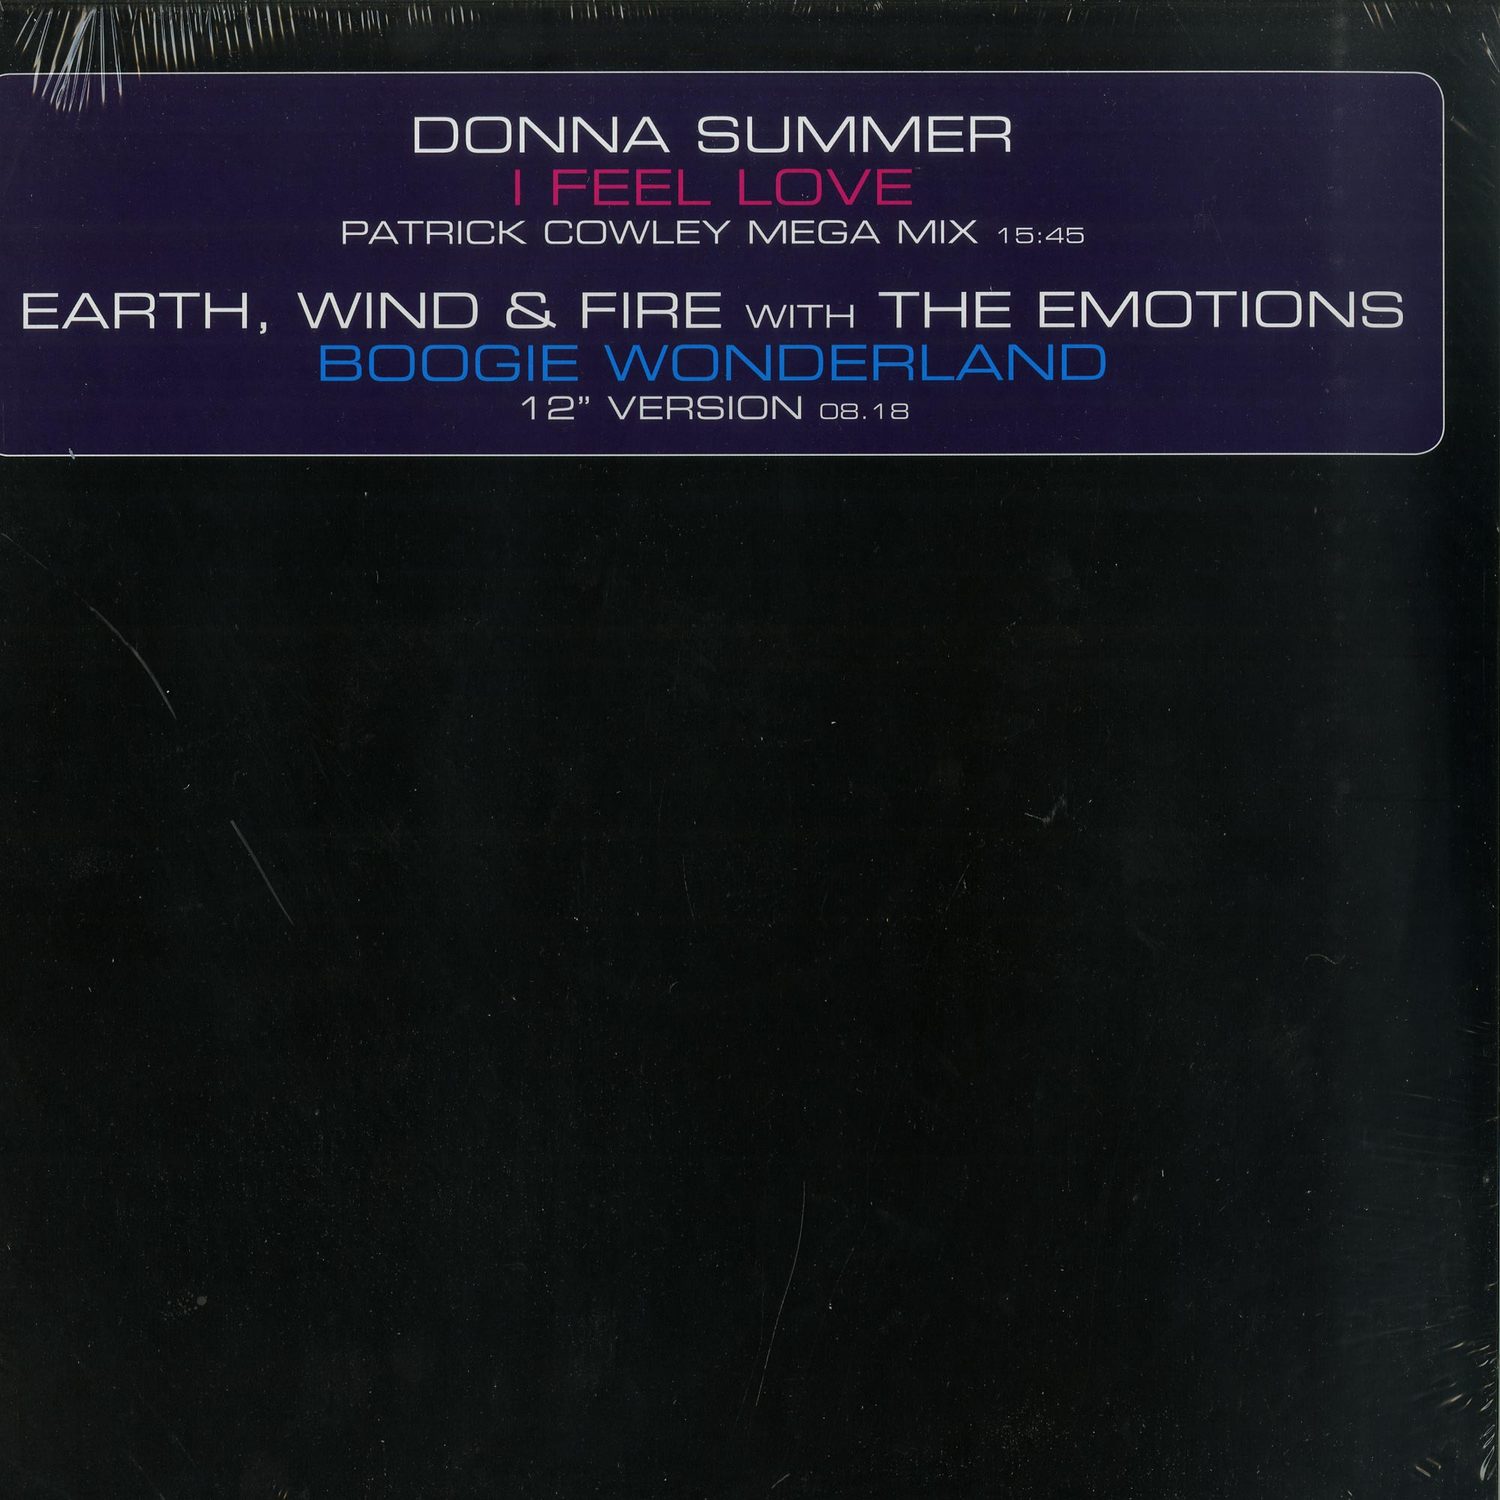 Donna Summer / Earth, Wind & Fire - I FEEL LOVE / BOOGIE WONDERLAND 